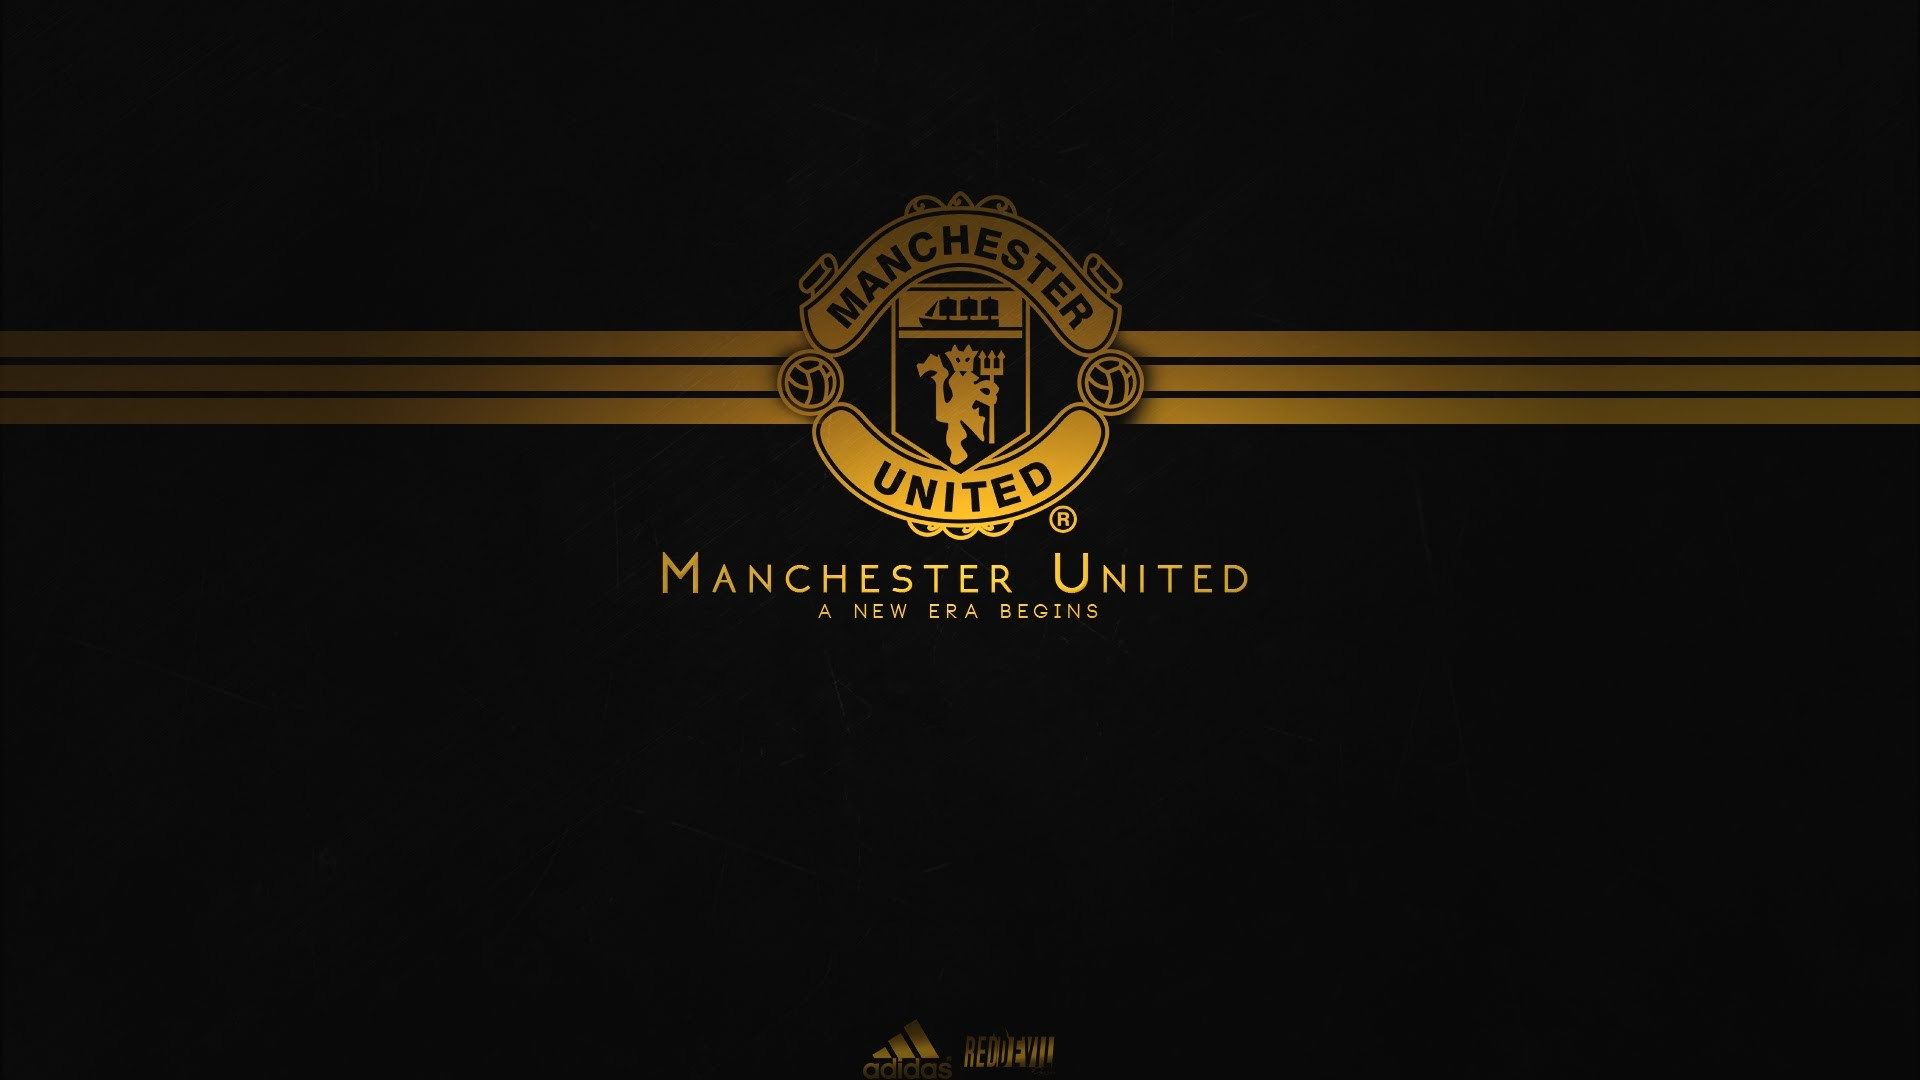 manchester united best wallpaper free. Manchester united wallpaper, Manchester united, Manchester united logo